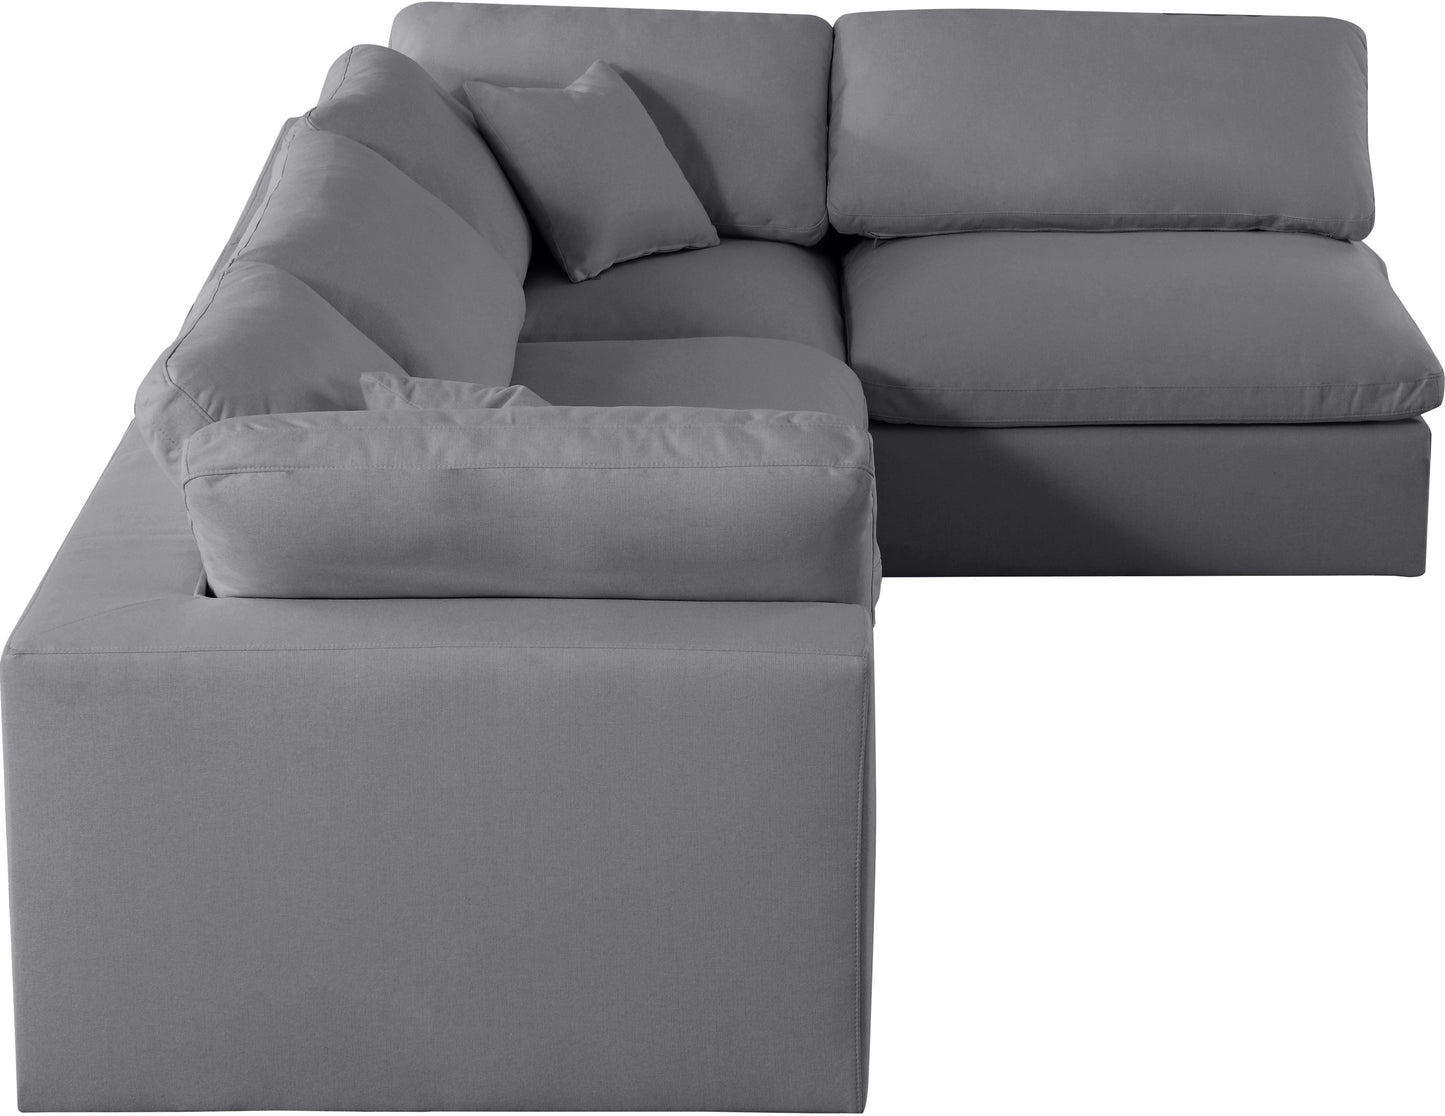 damian grey linen textured fabric deluxe comfort modular sectional sec4b